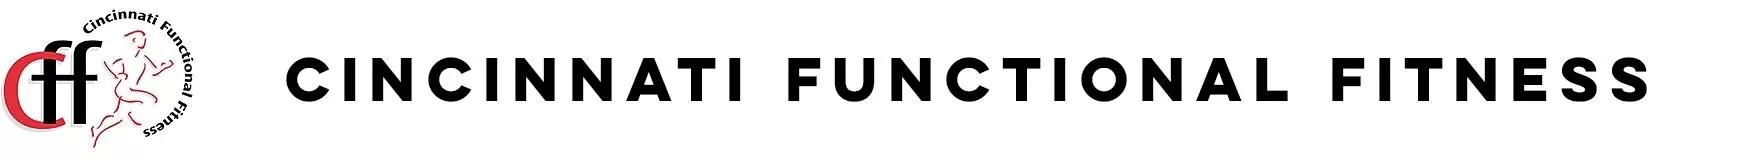 Cincinnati Functional Fitness Logo